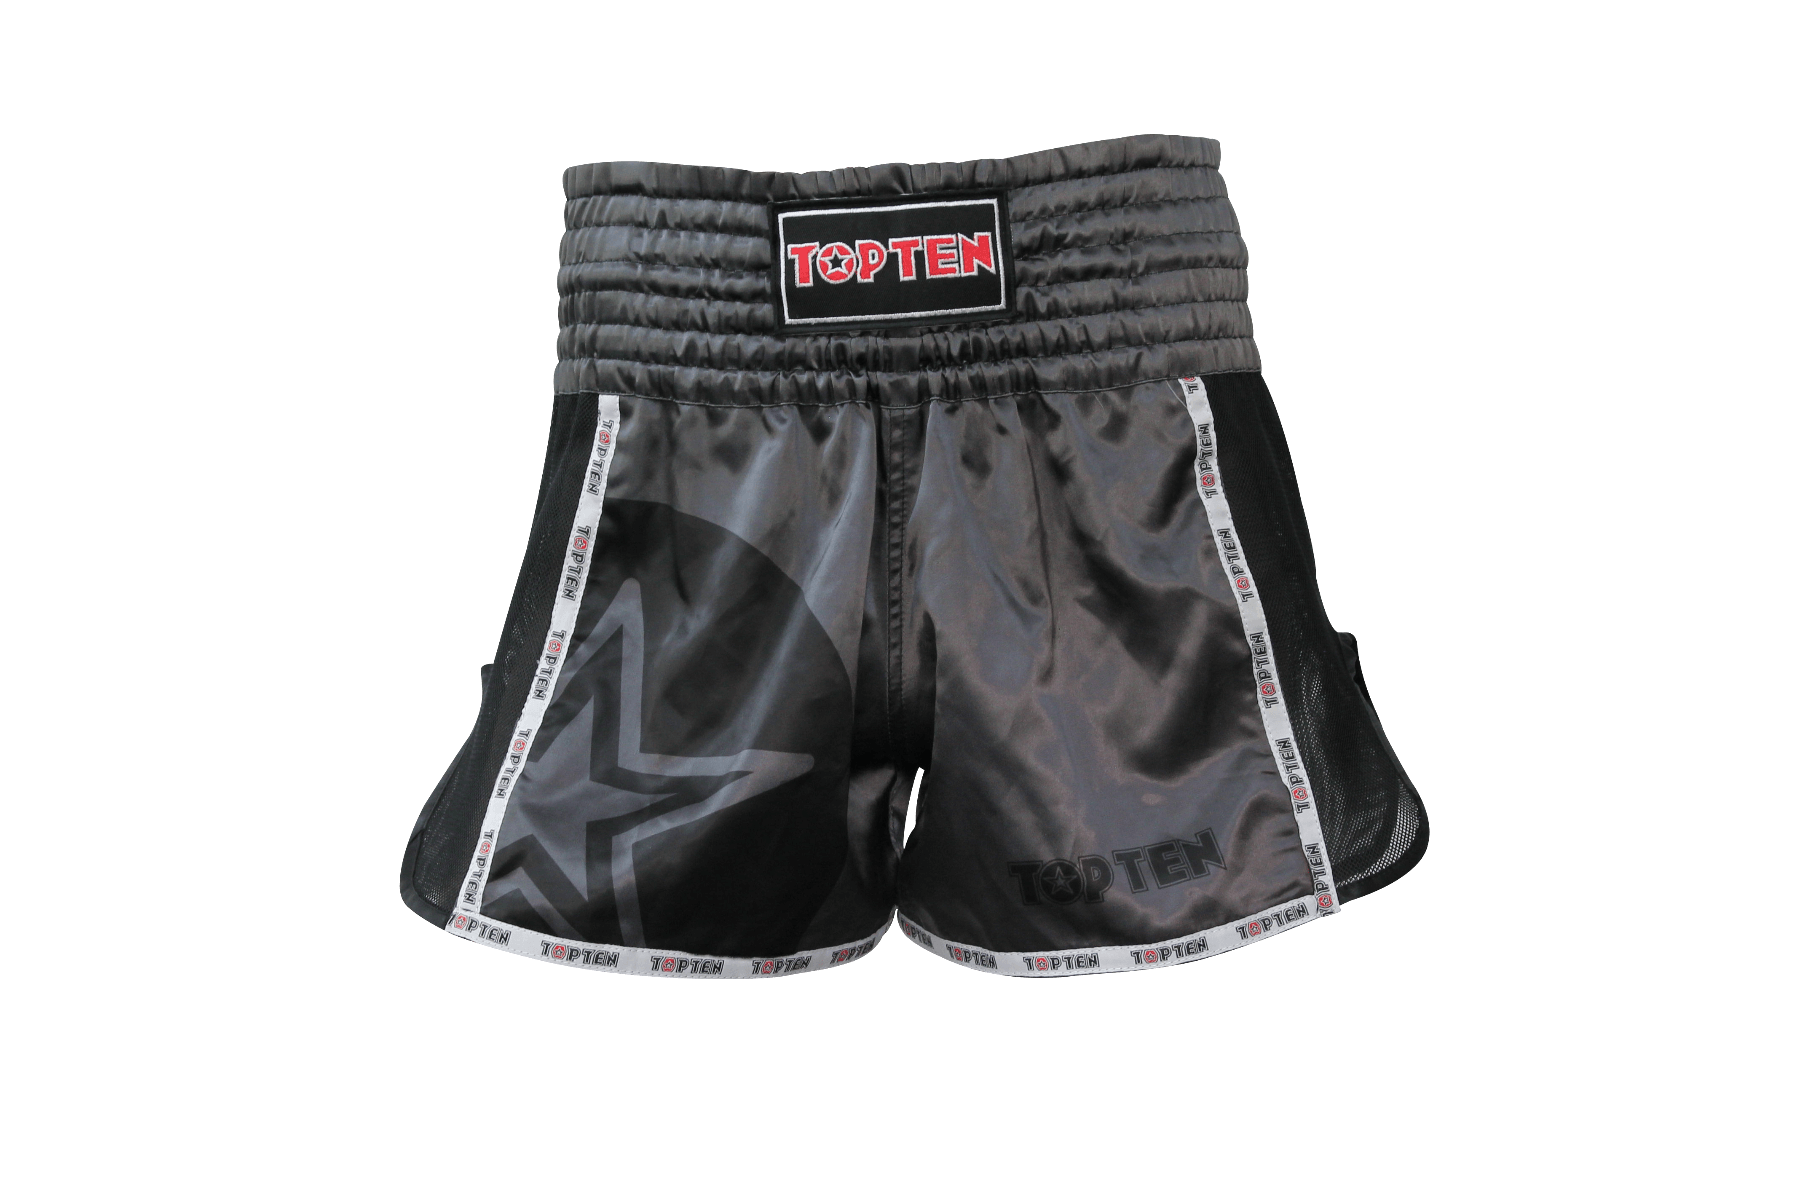 thai-kickboxing-shorts-topten-star-black-front